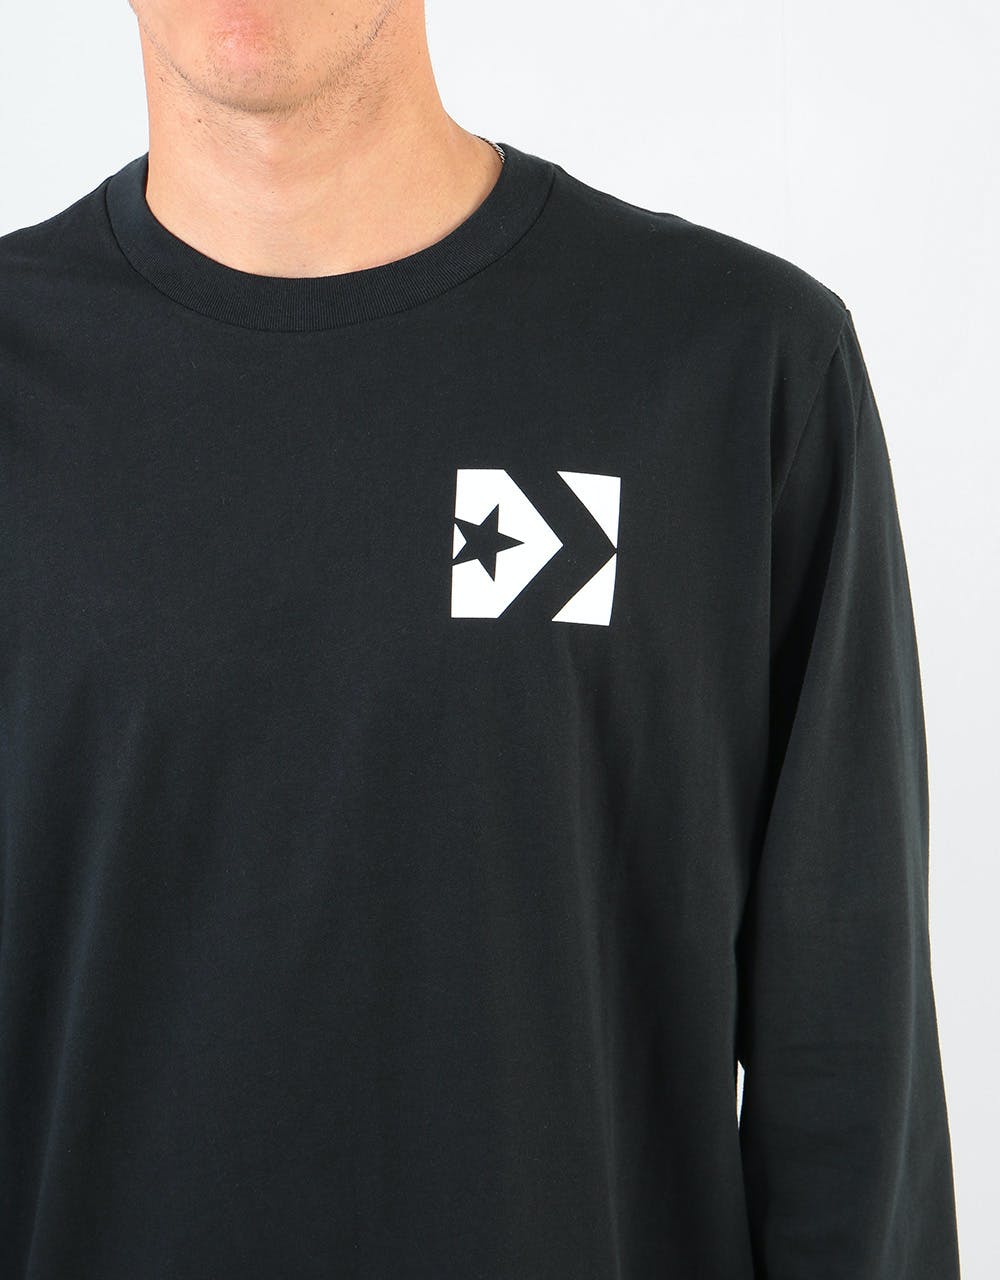 Converse Wordmark L/S T-Shirt - Black